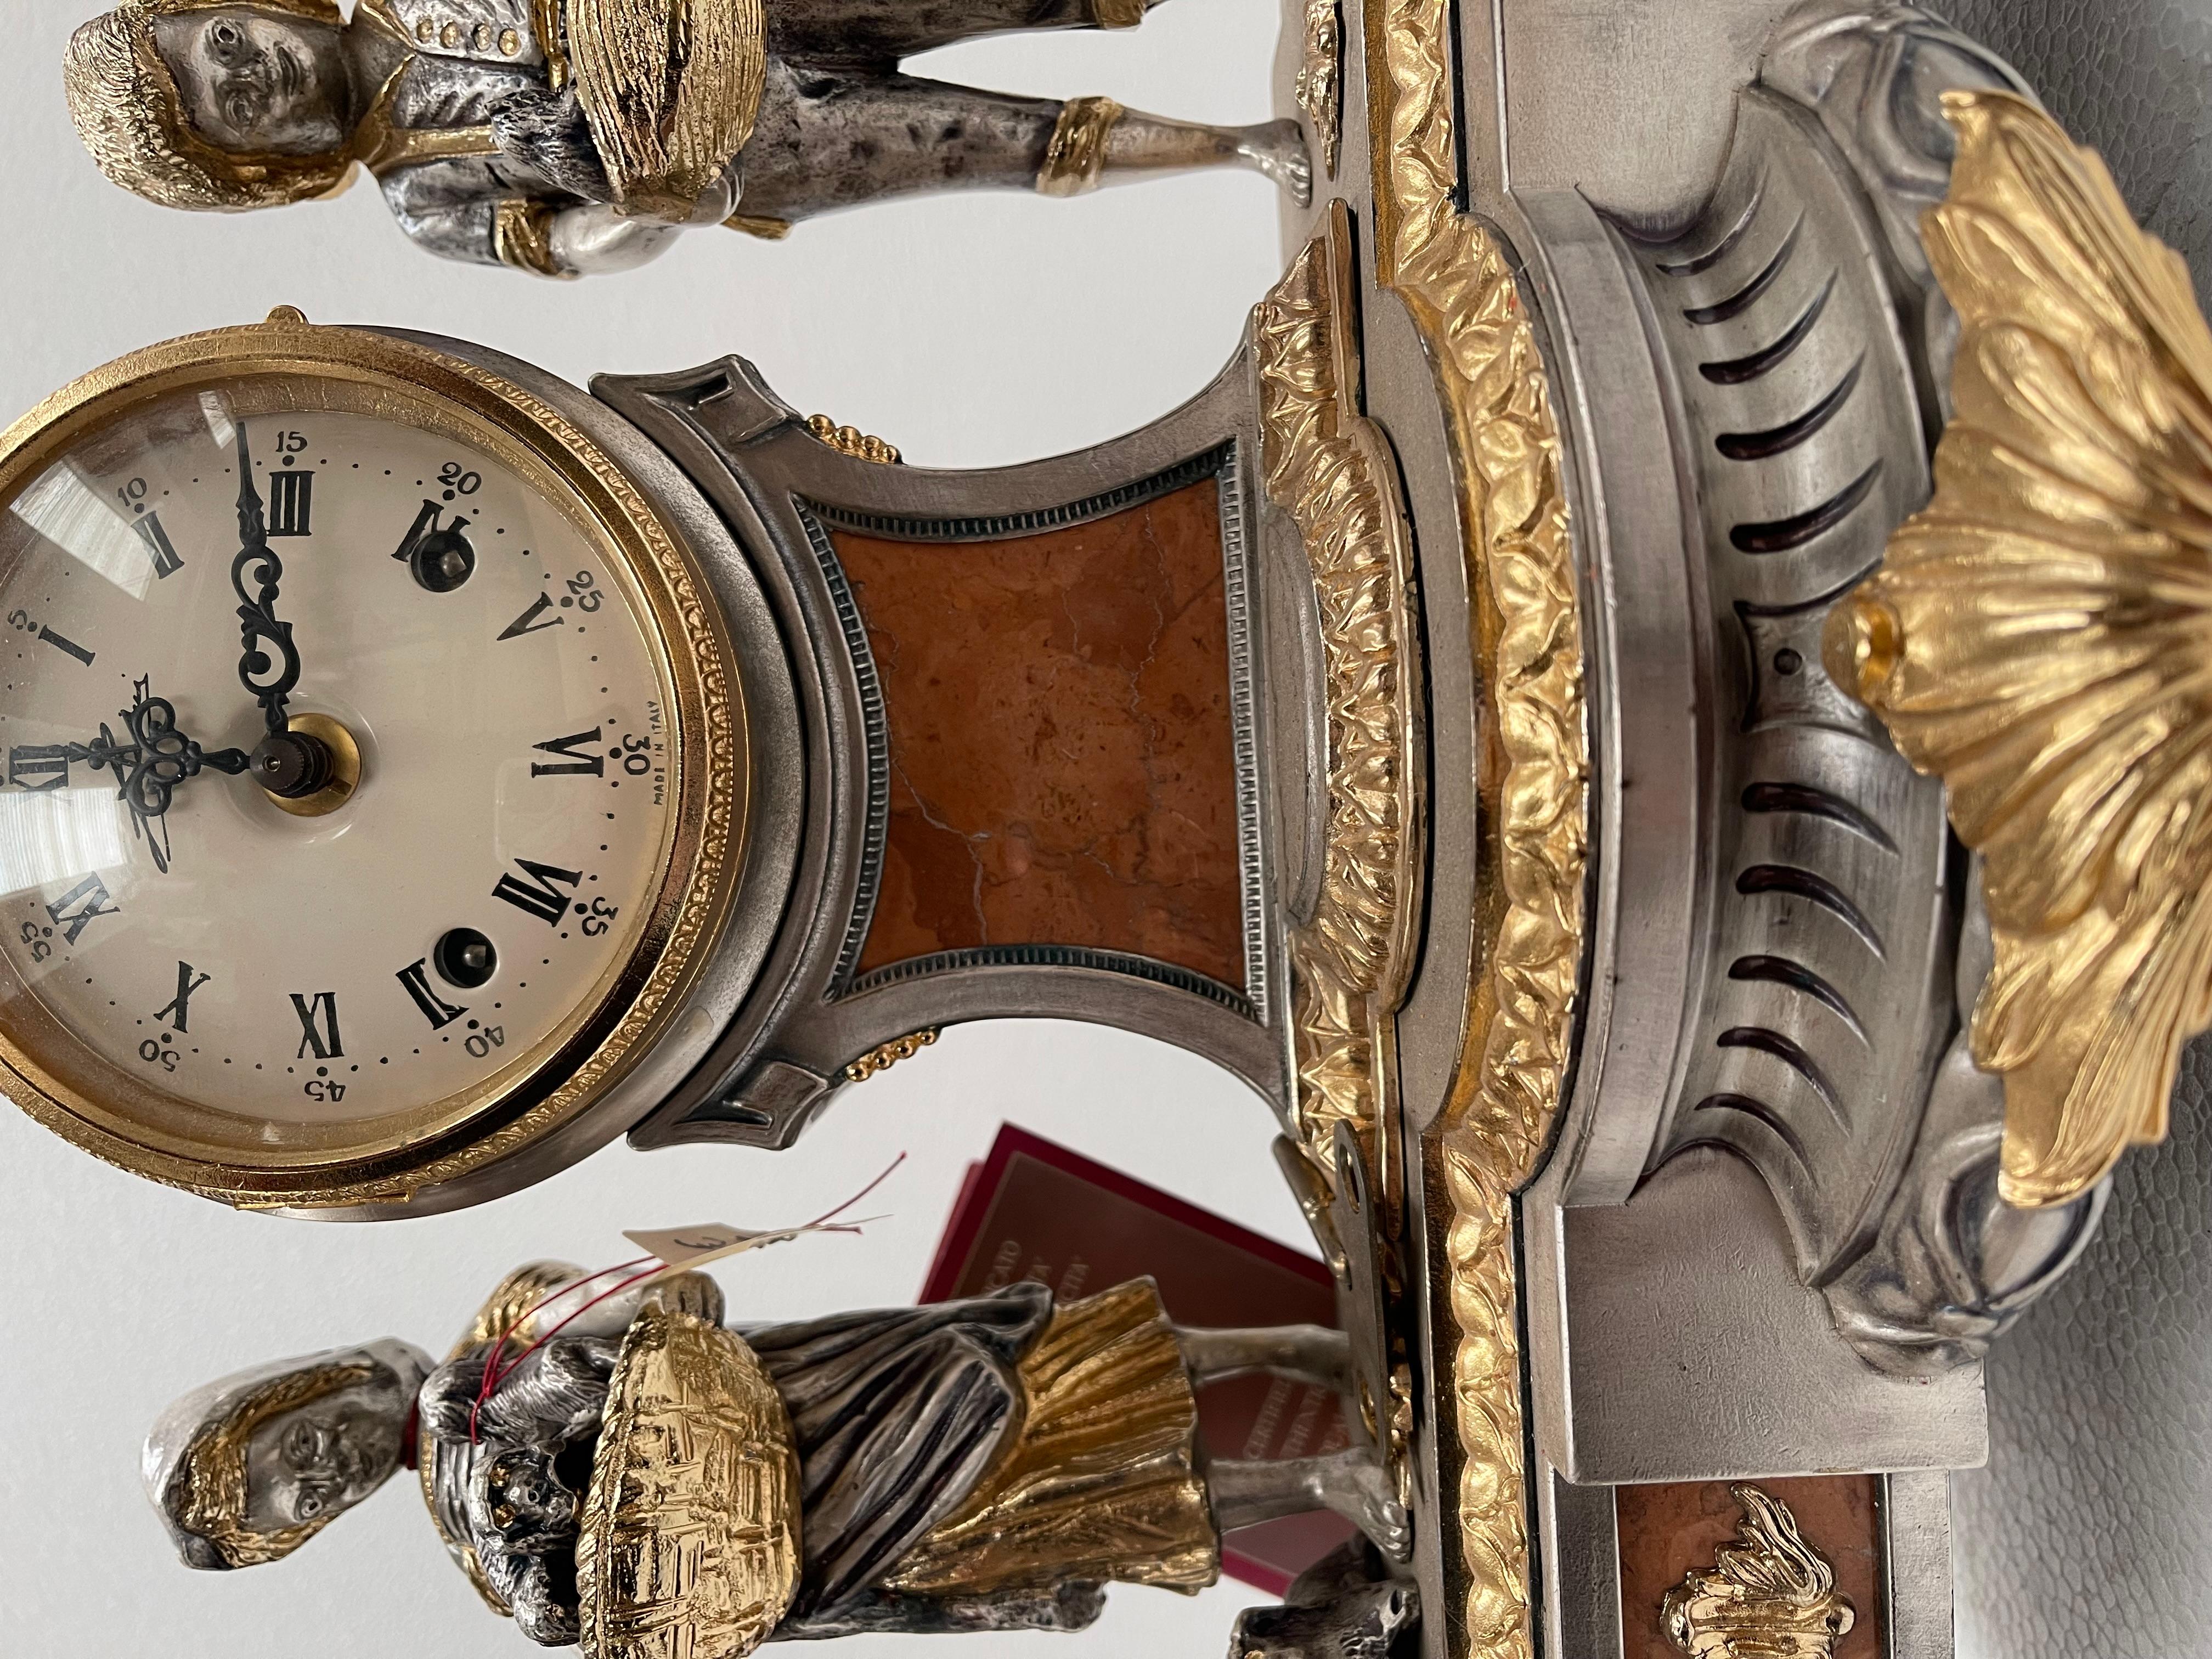 Antico orologio oro argento  In Excellent Condition For Sale In Cantù, IT